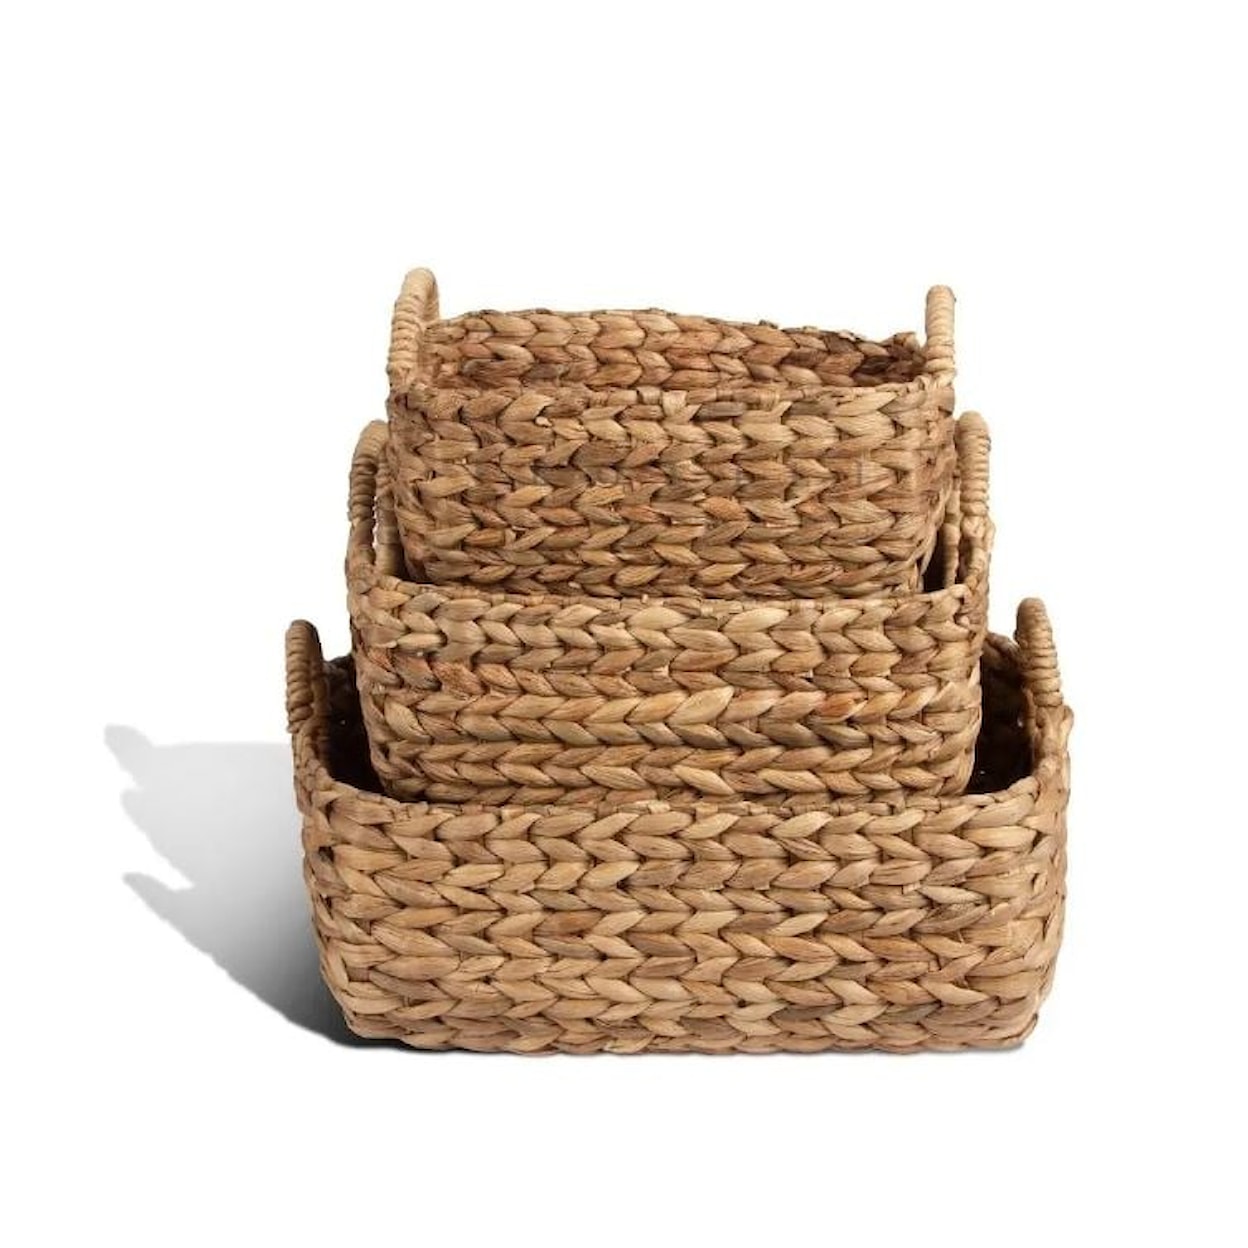 Ibolili Baskets and Sets WOVEN WATER HYACINTH BASKET